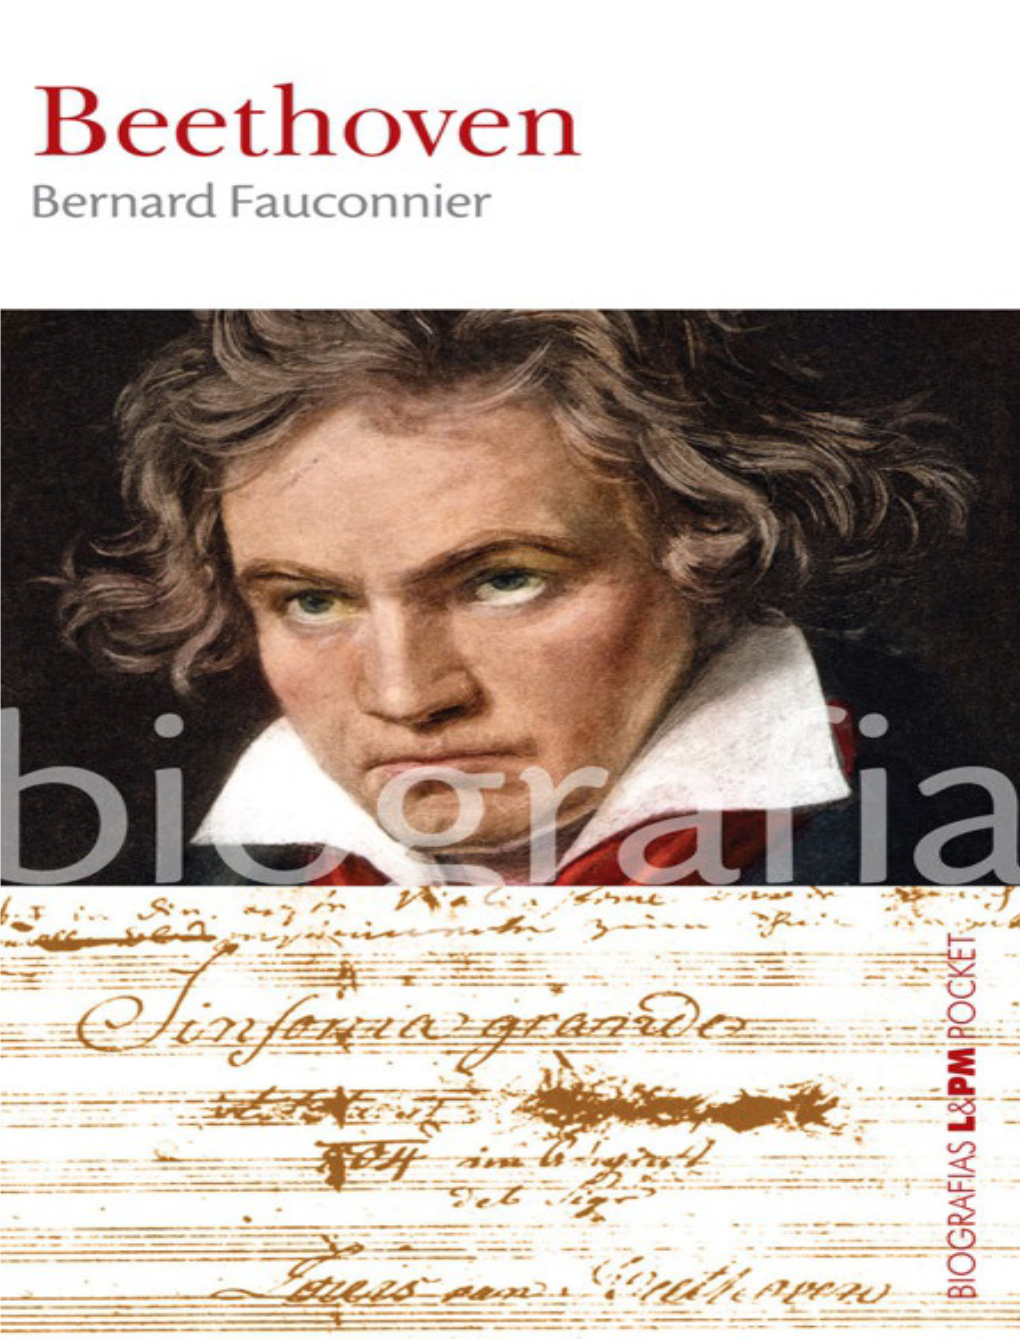 Beethoven - Bernard Fauconnier